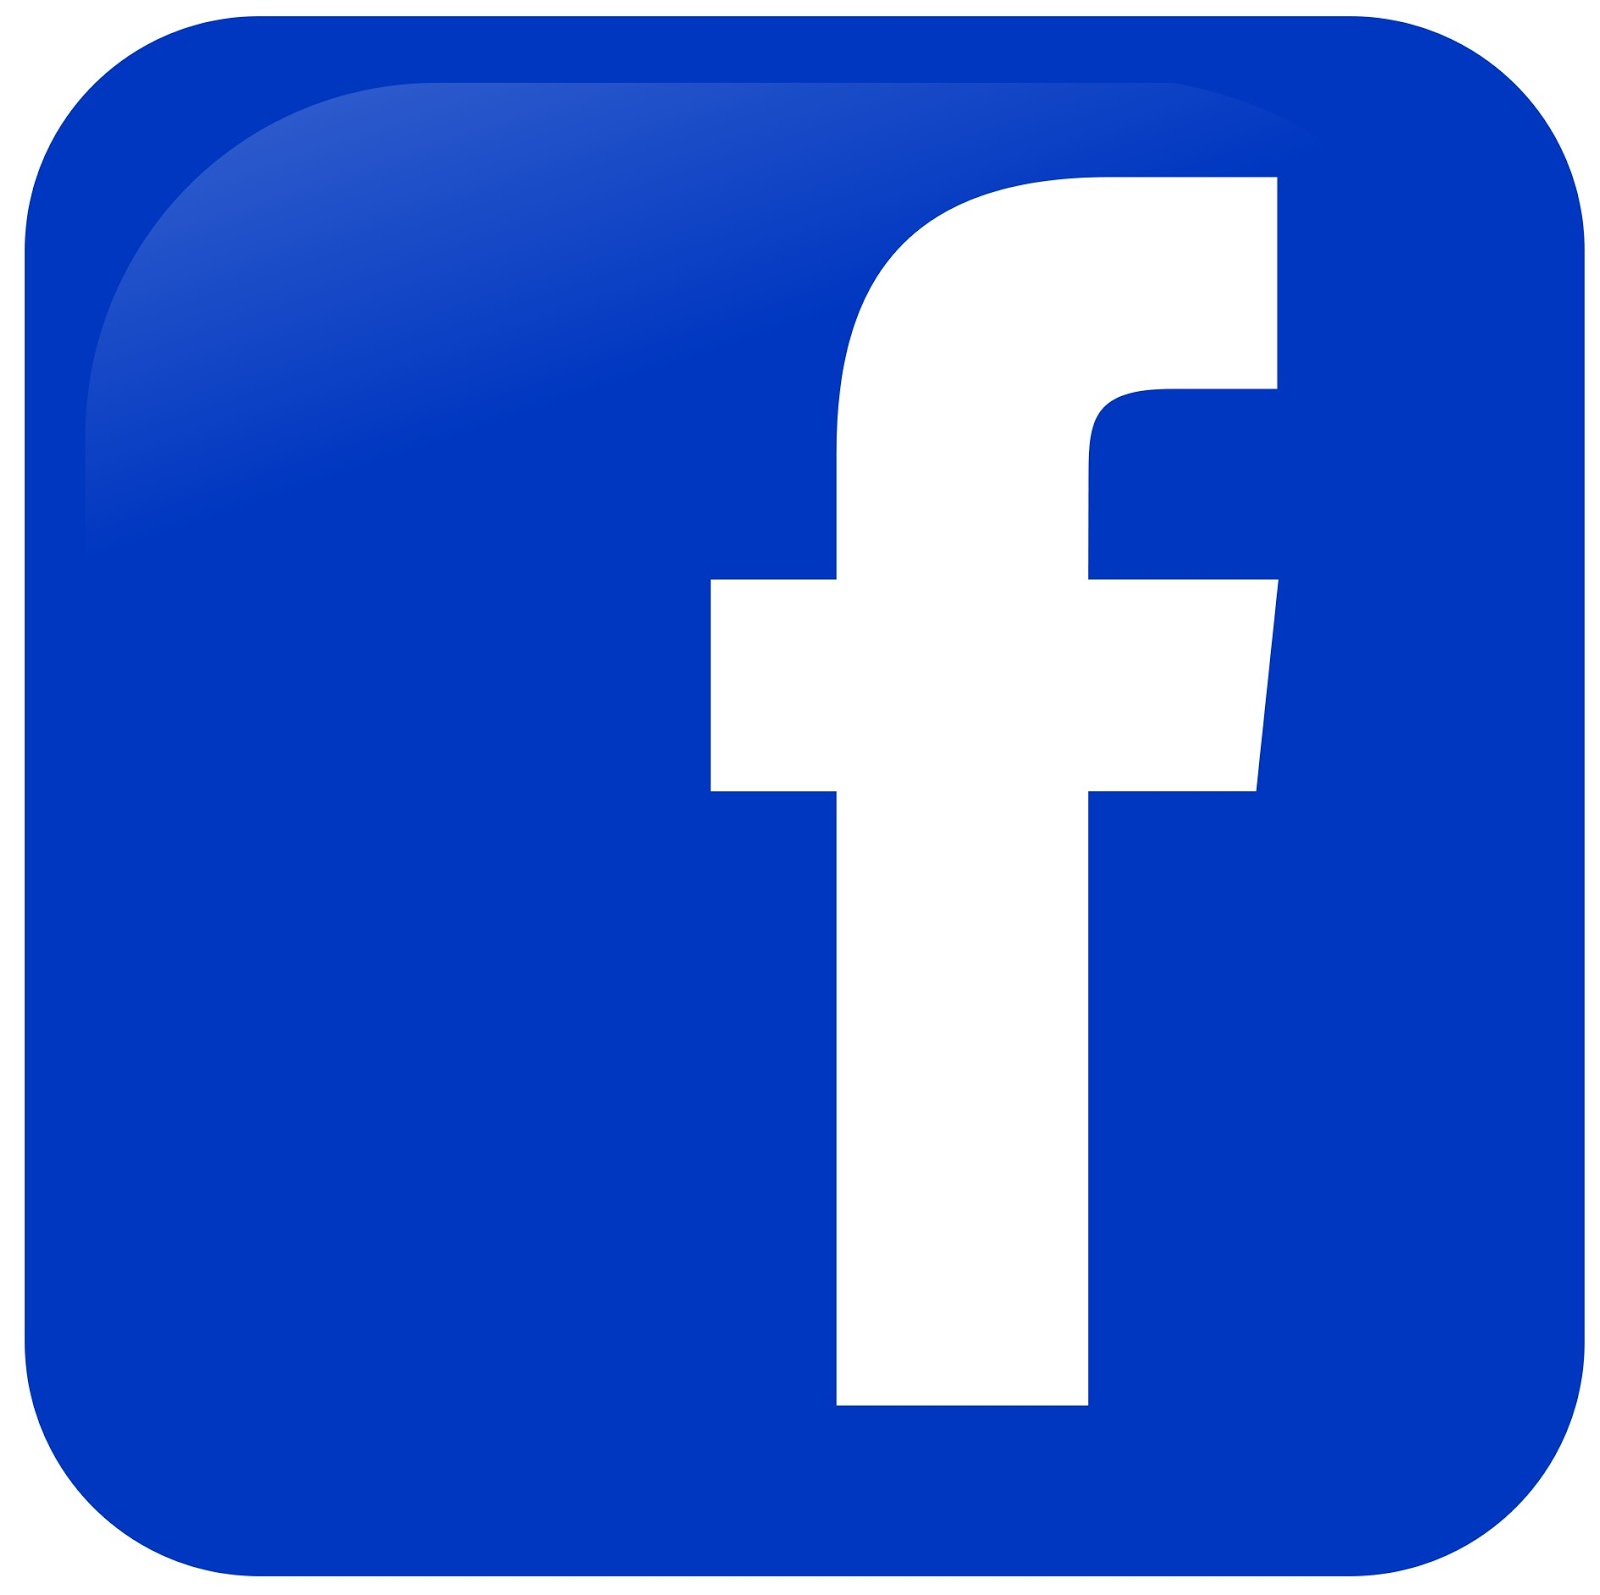 Facebook logo vector free download clipart